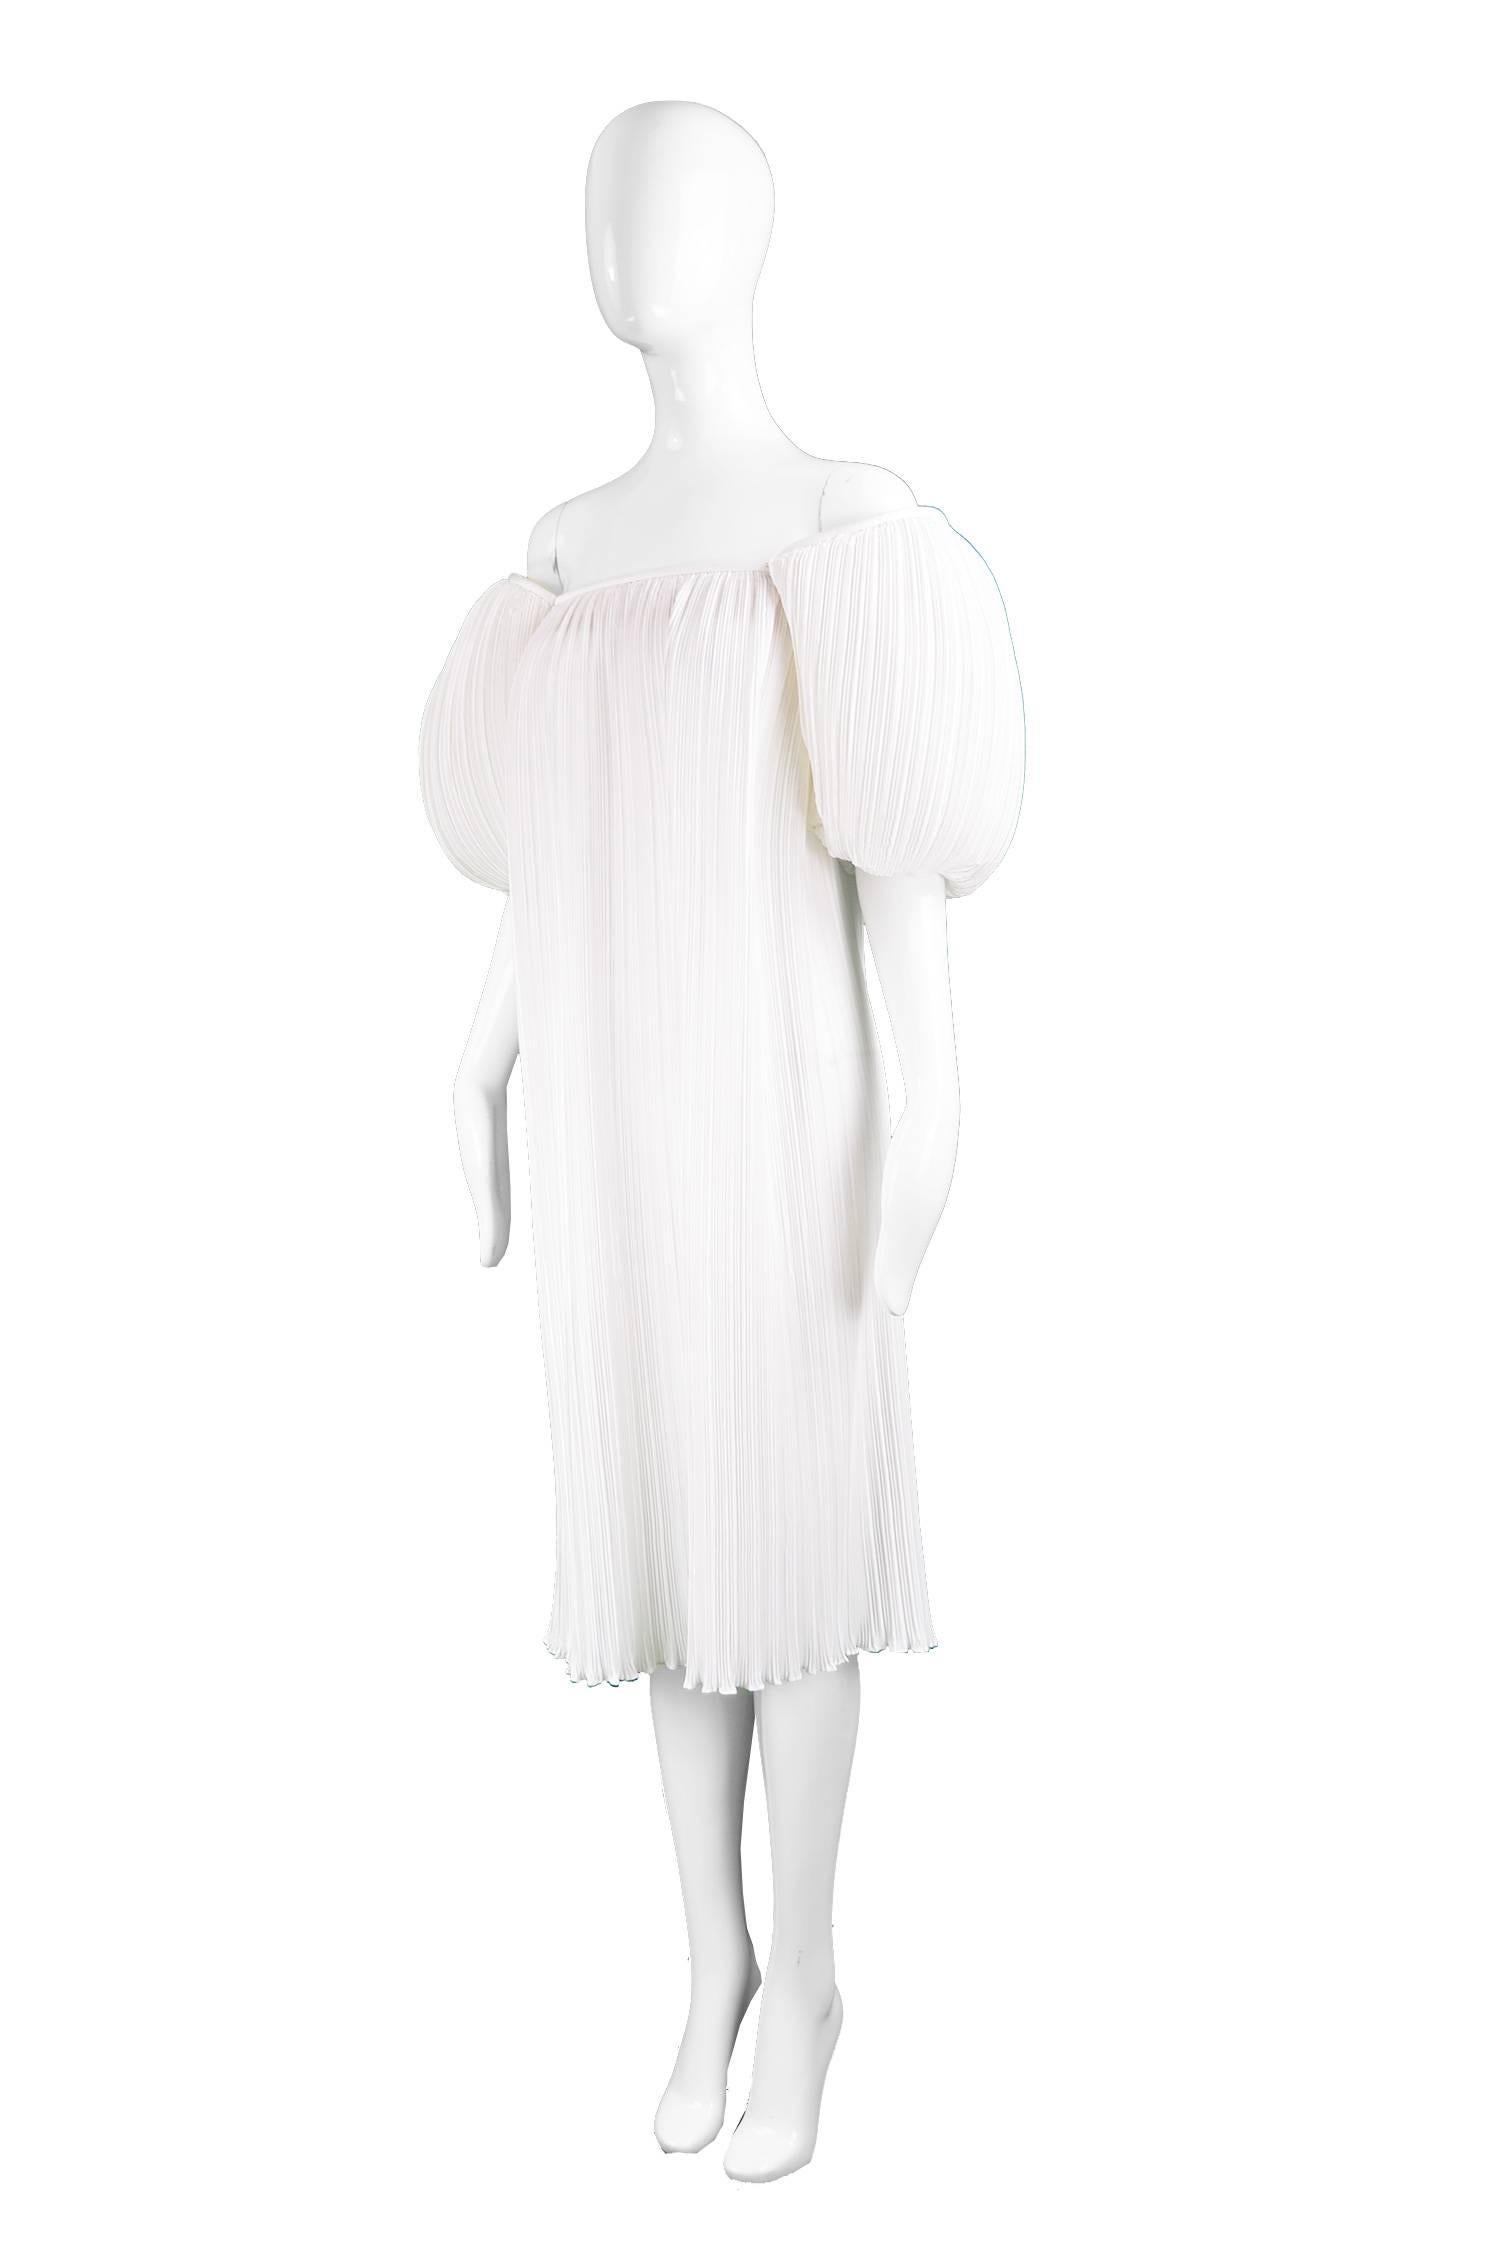 Gray S.G. Gilbert for I. Magnin Ethereal White Vintage Fortuny Pleat Dress, 1980s